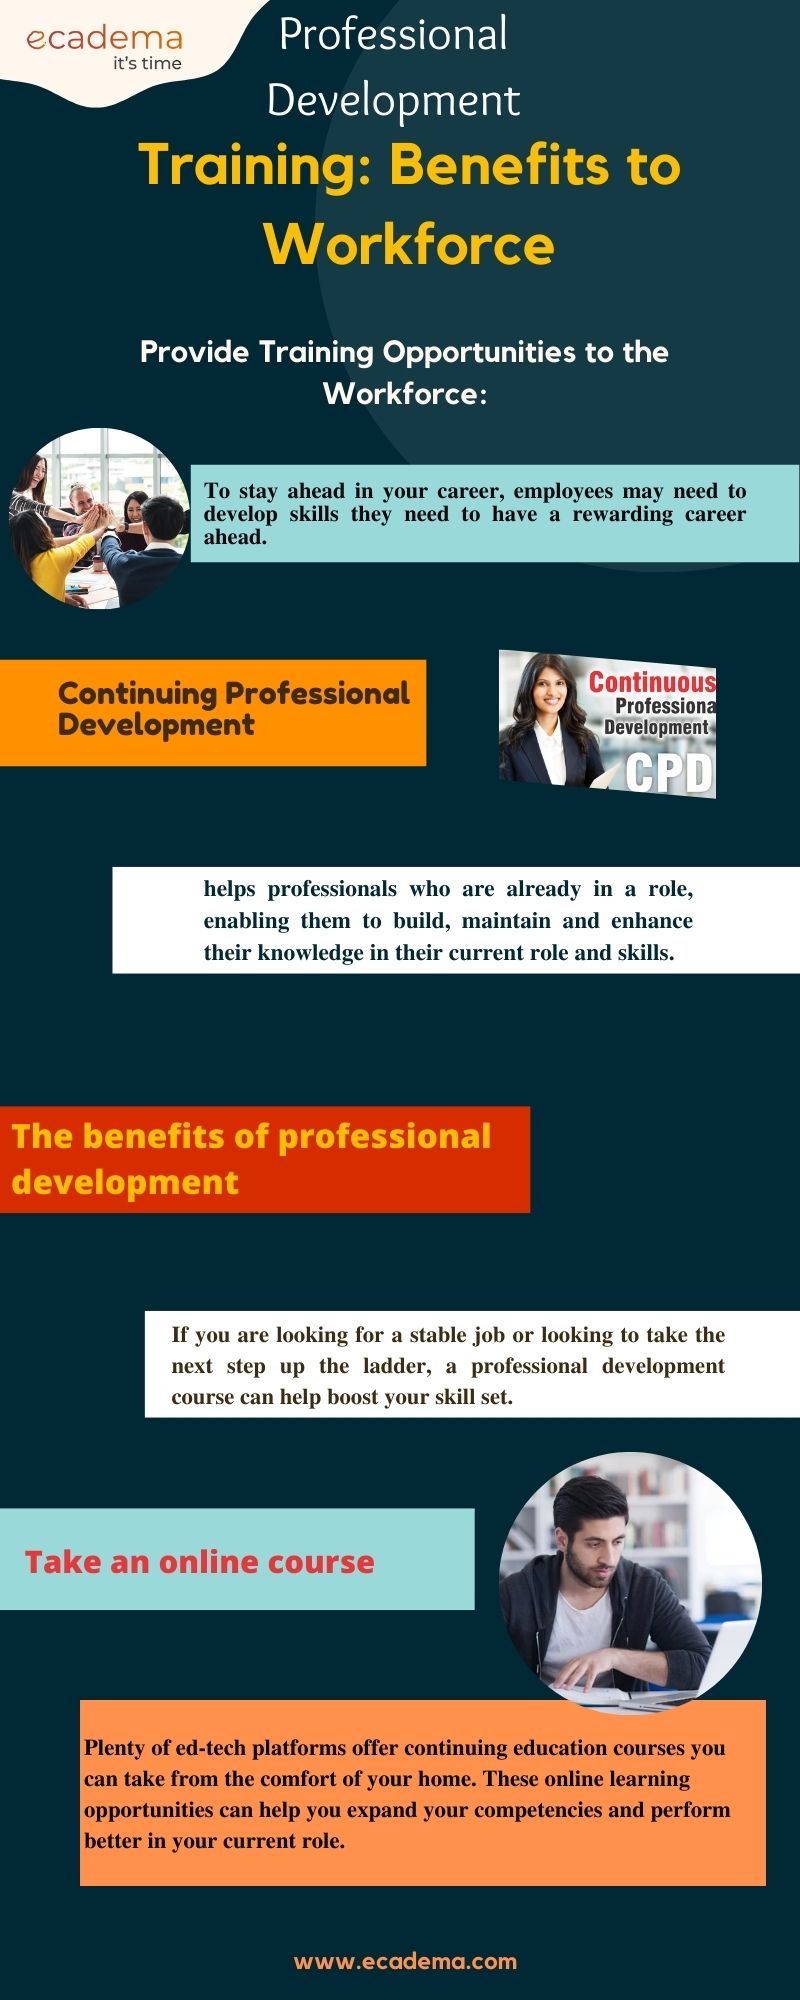 Professional Development.jpg  by ecadema